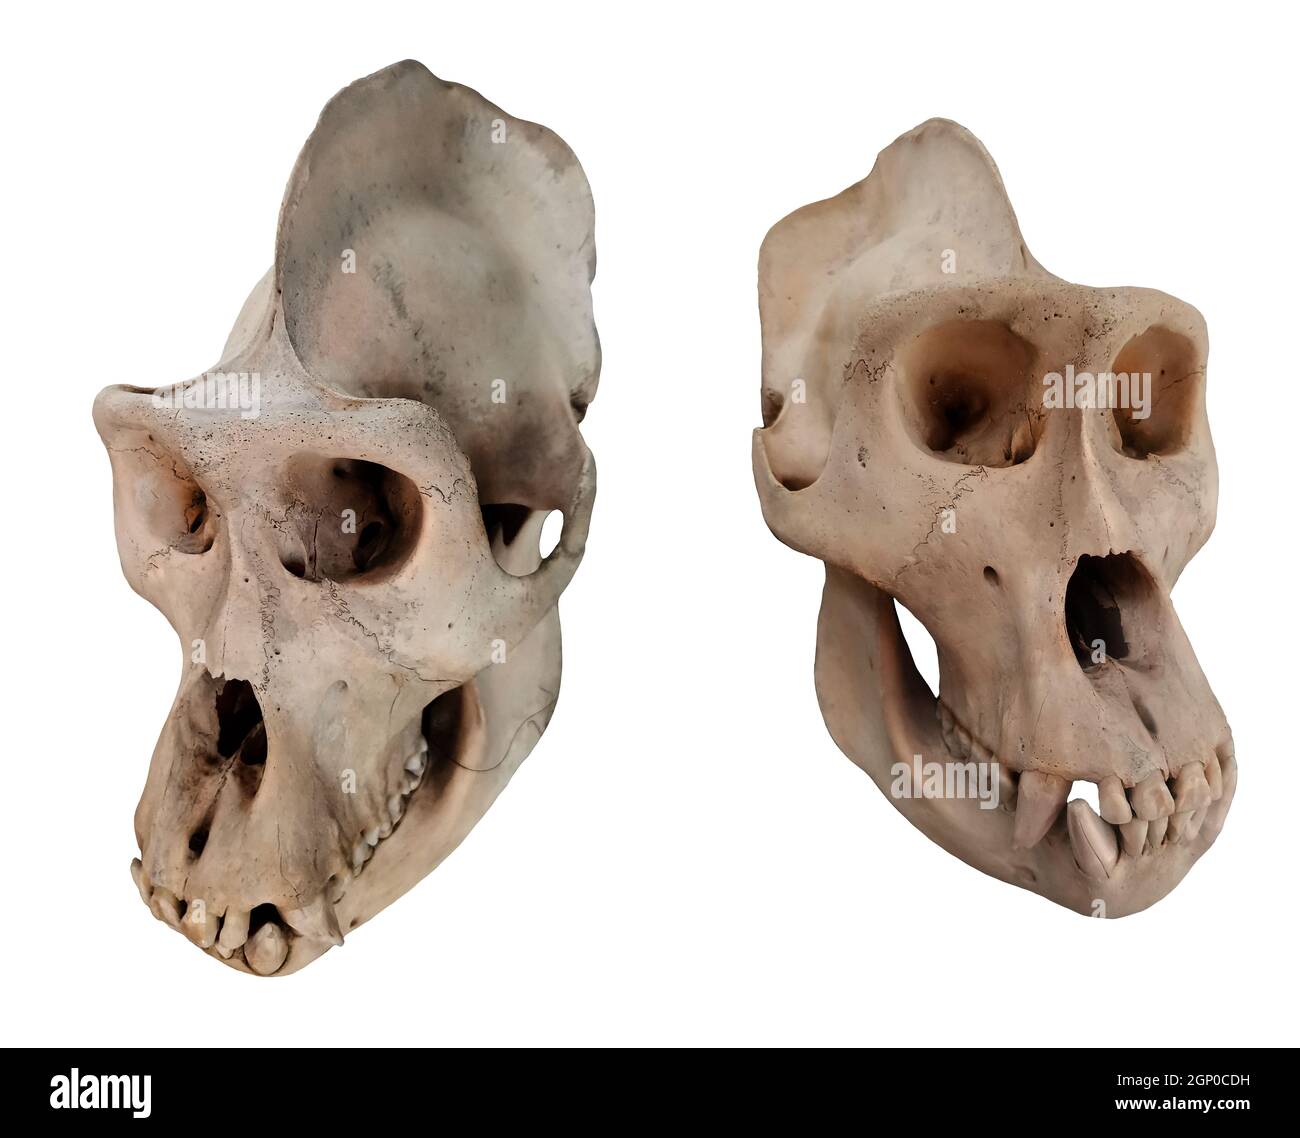 Gorilla skull. Photo with ape bones. Stock Photo